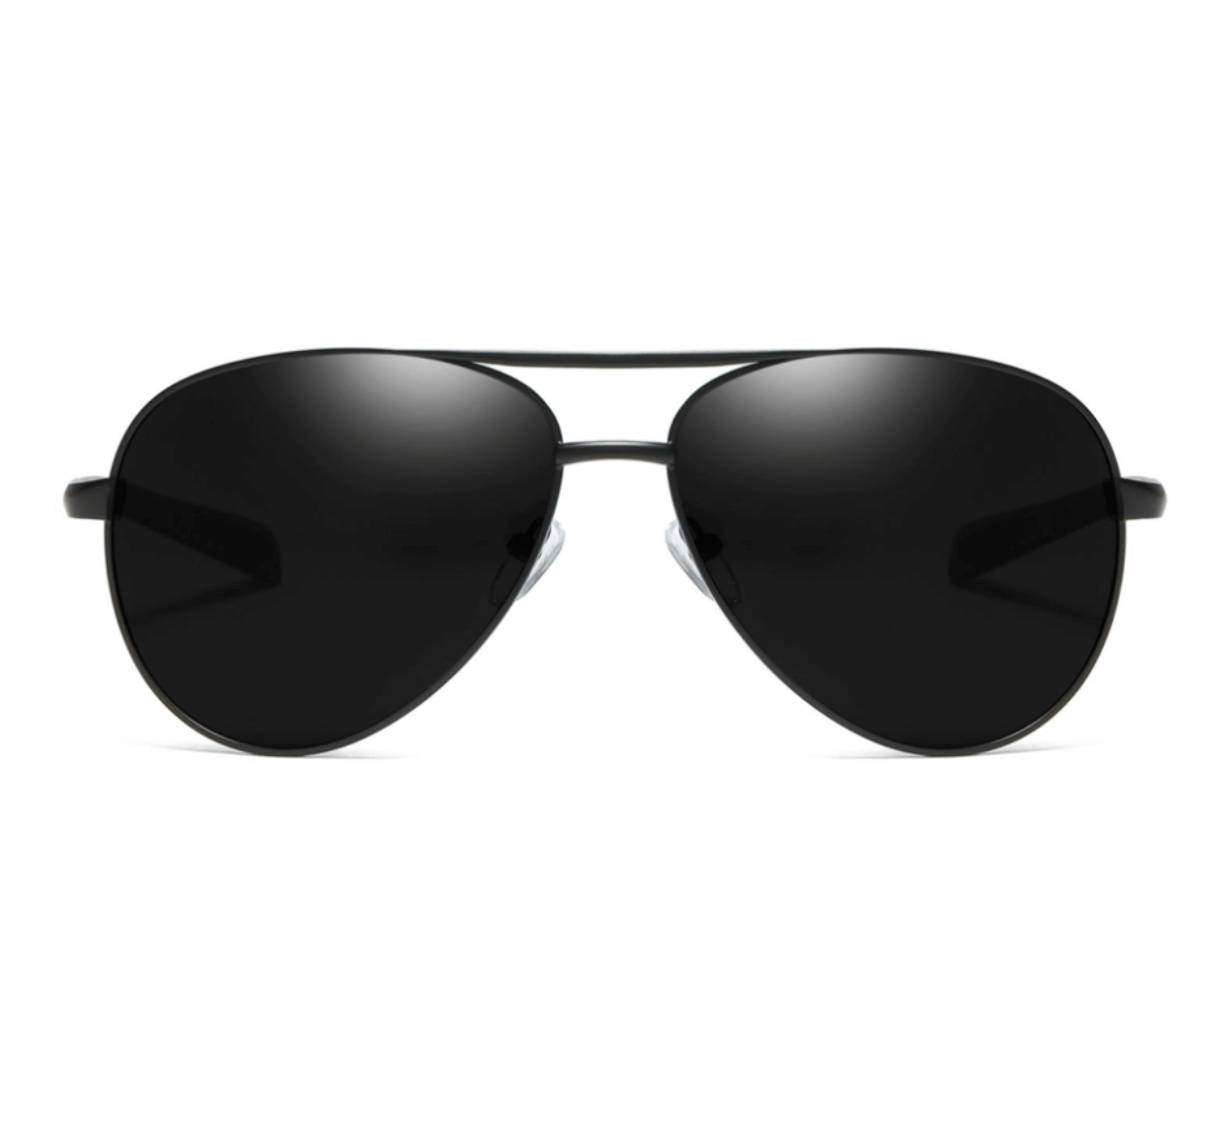 Sunglasses Optical Frames, wholesale sunglasses frames